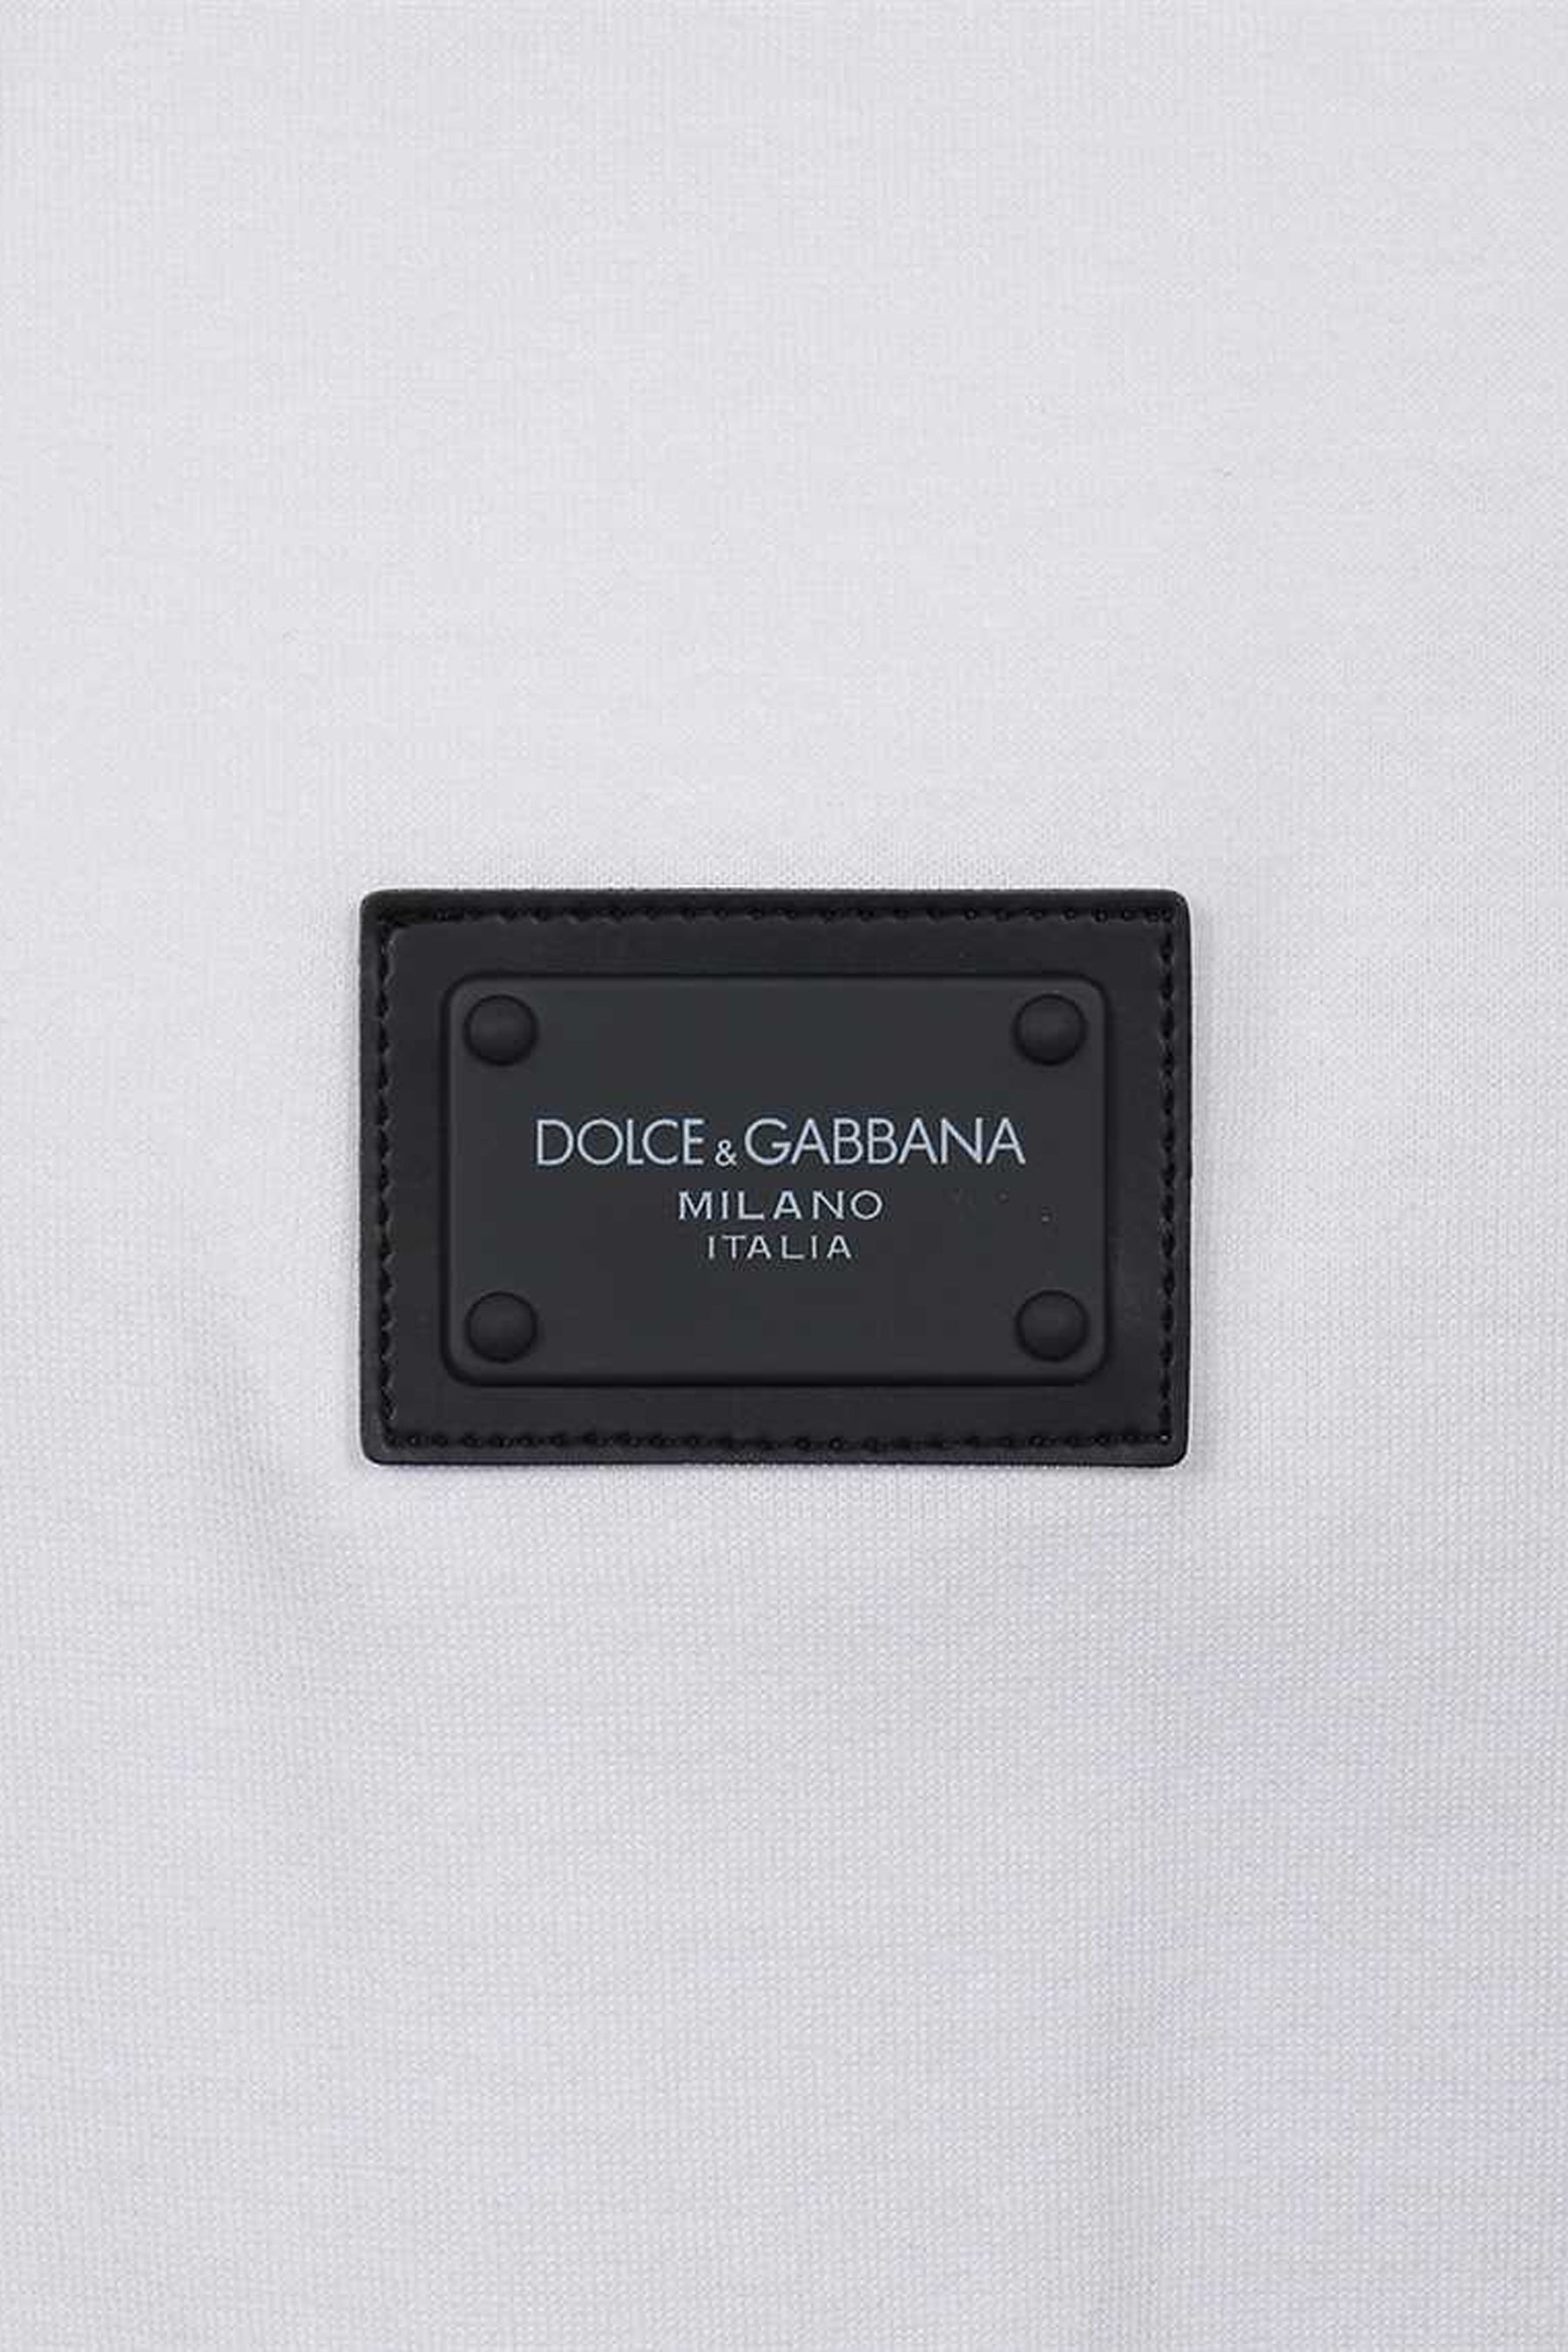 Dolce & Gabbana White Cotton Black Plate T-Shirt